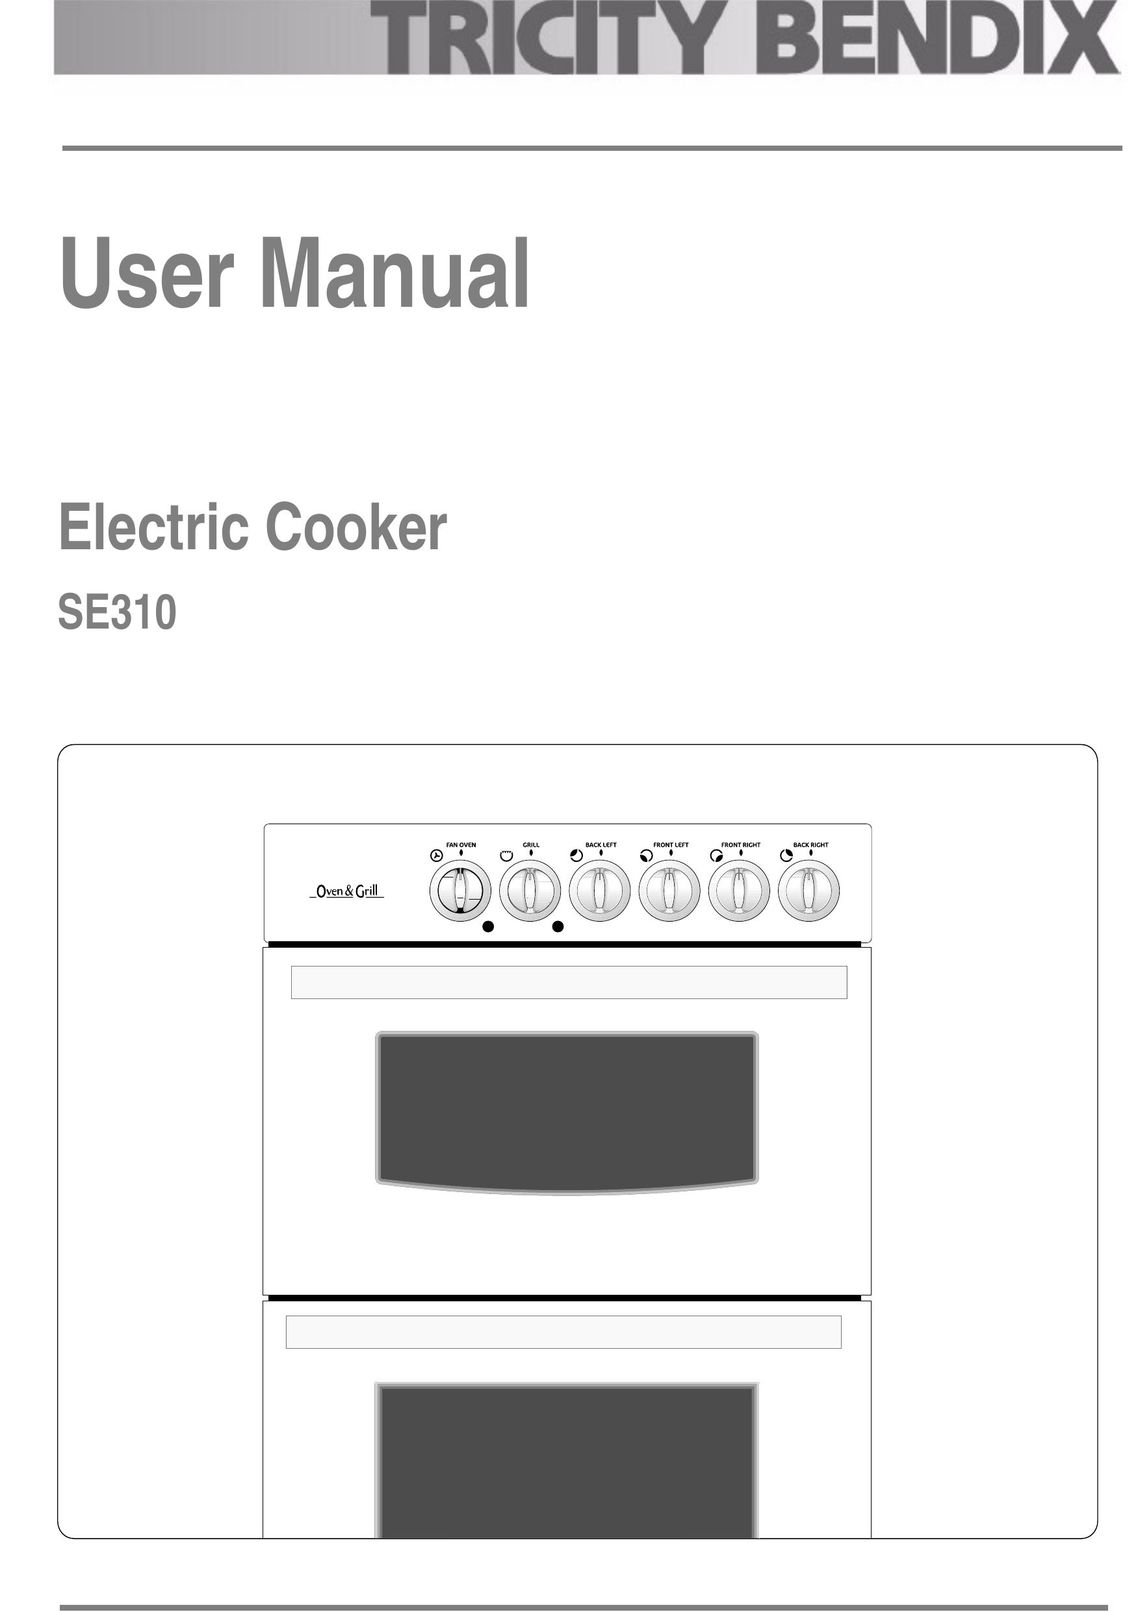 Tricity Bendix SE310 Cooktop User Manual